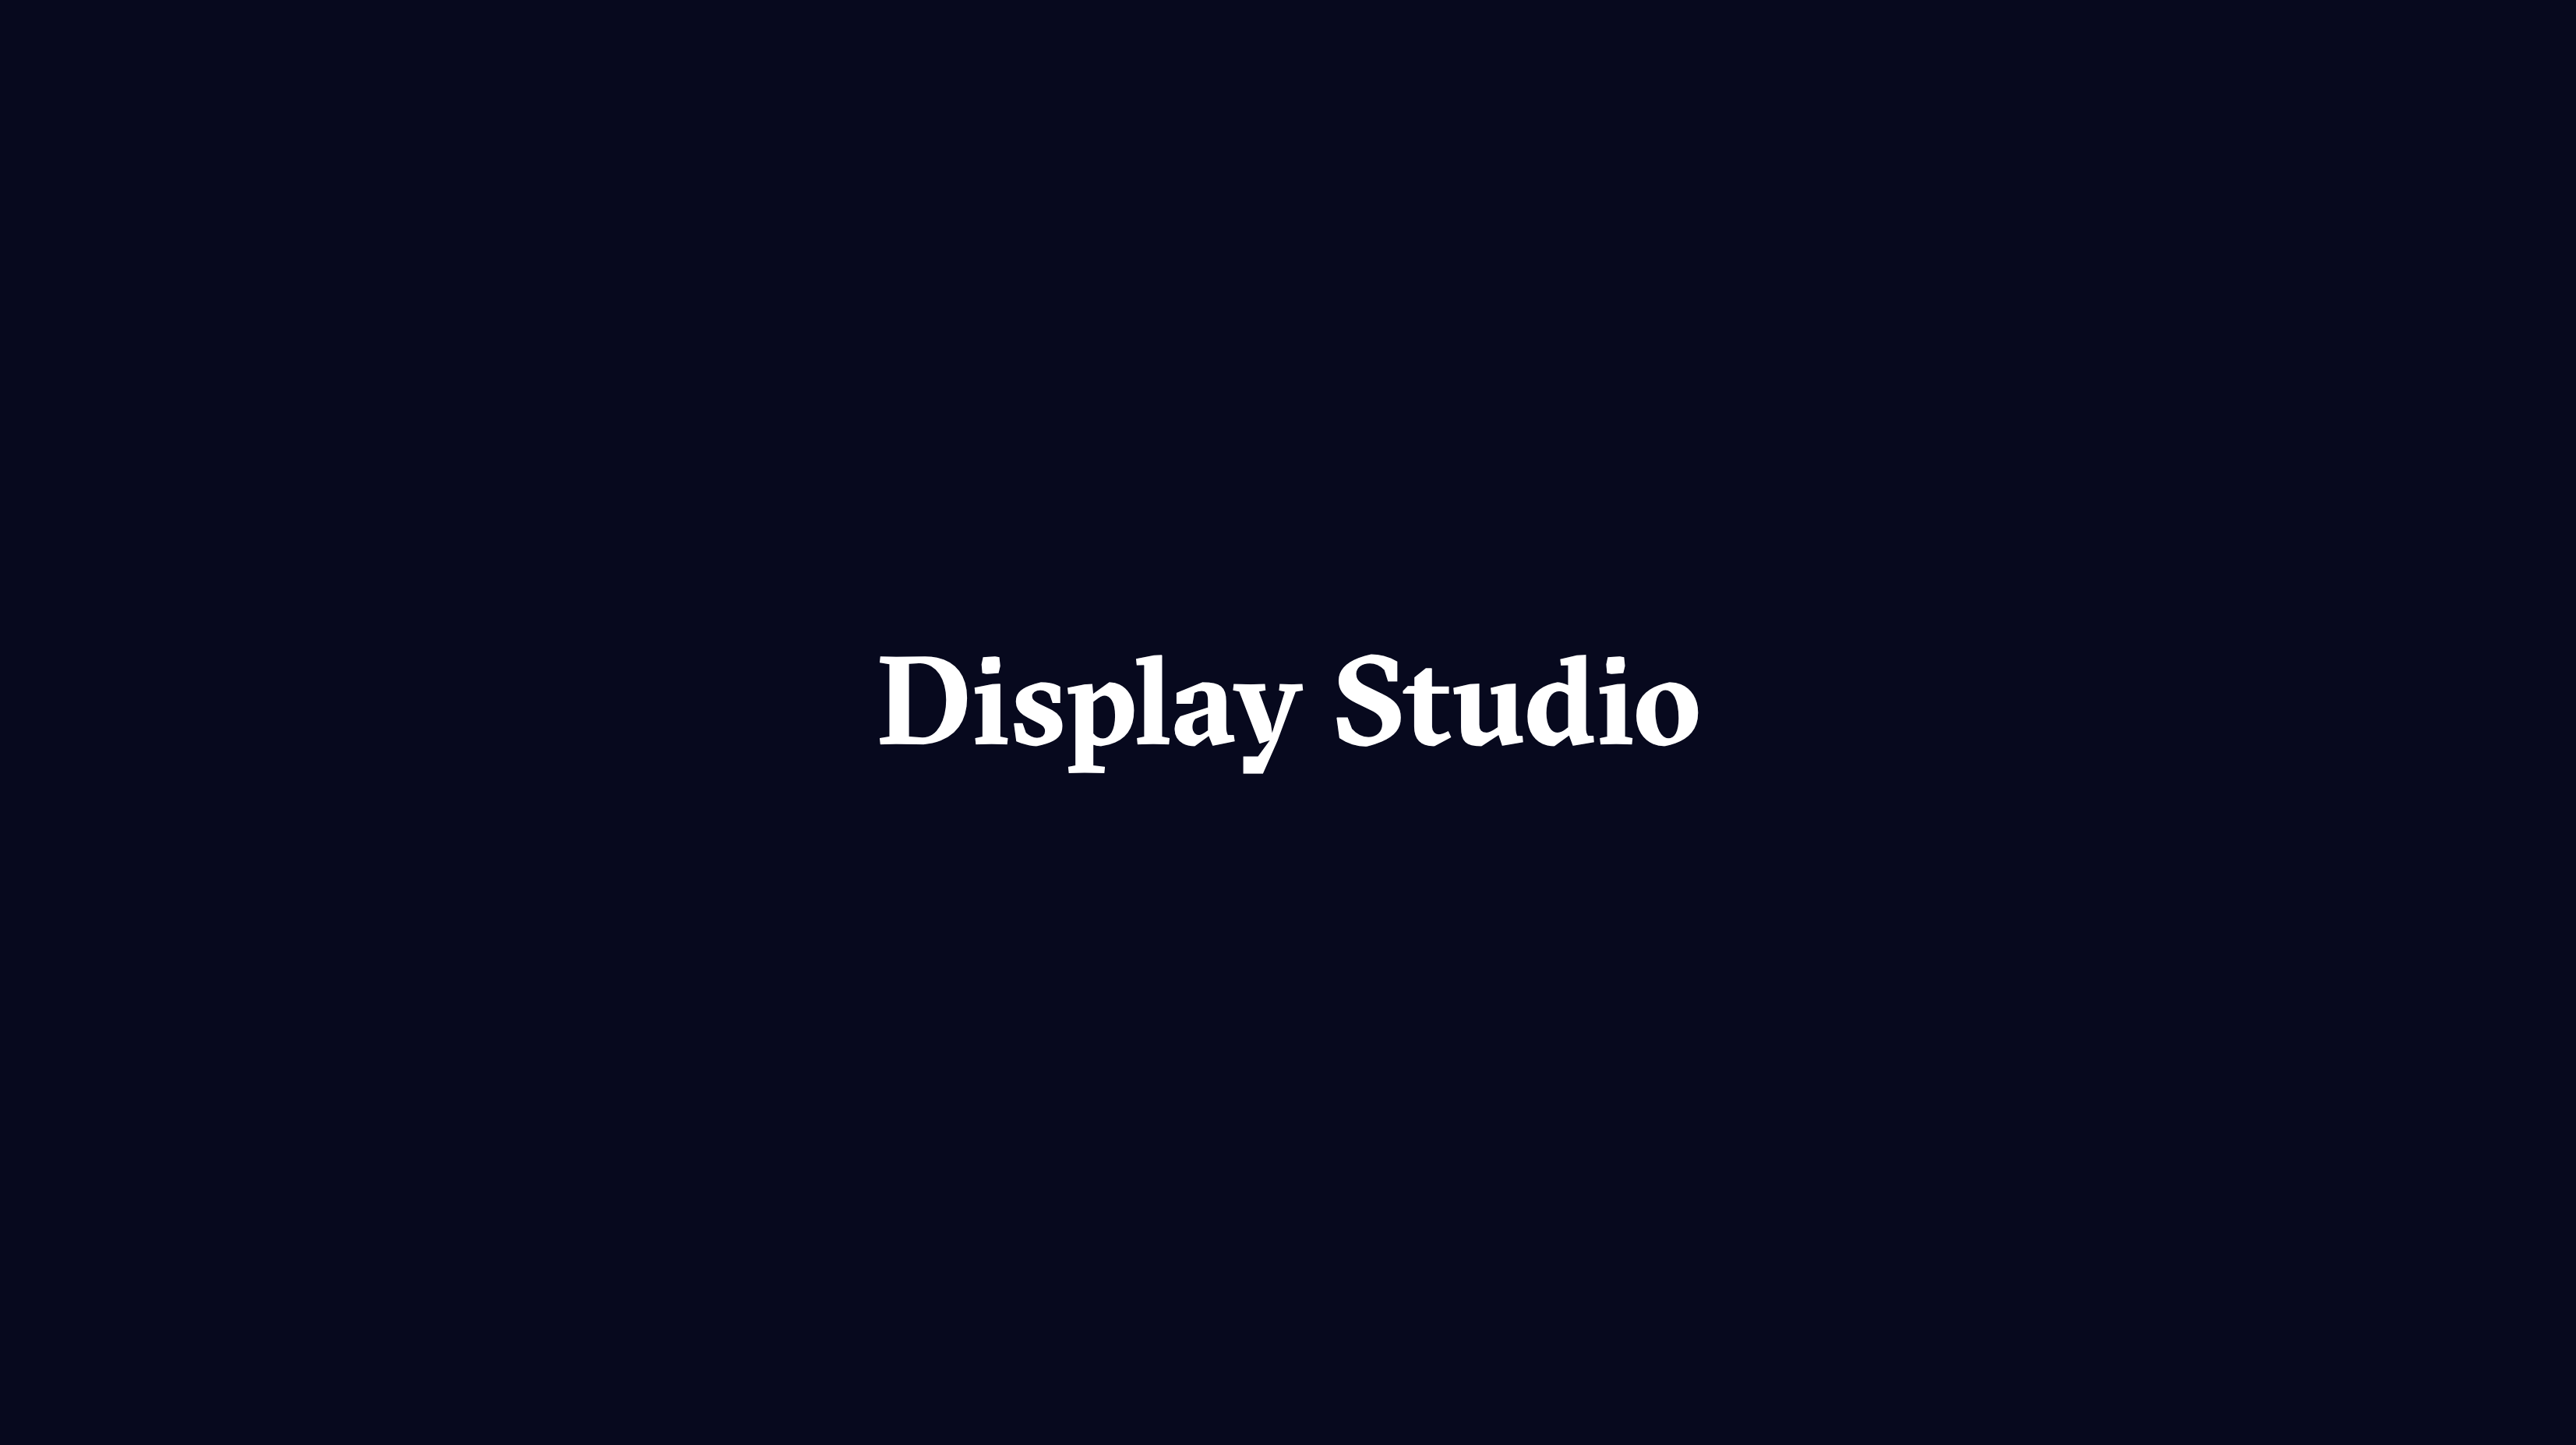 Display Studio